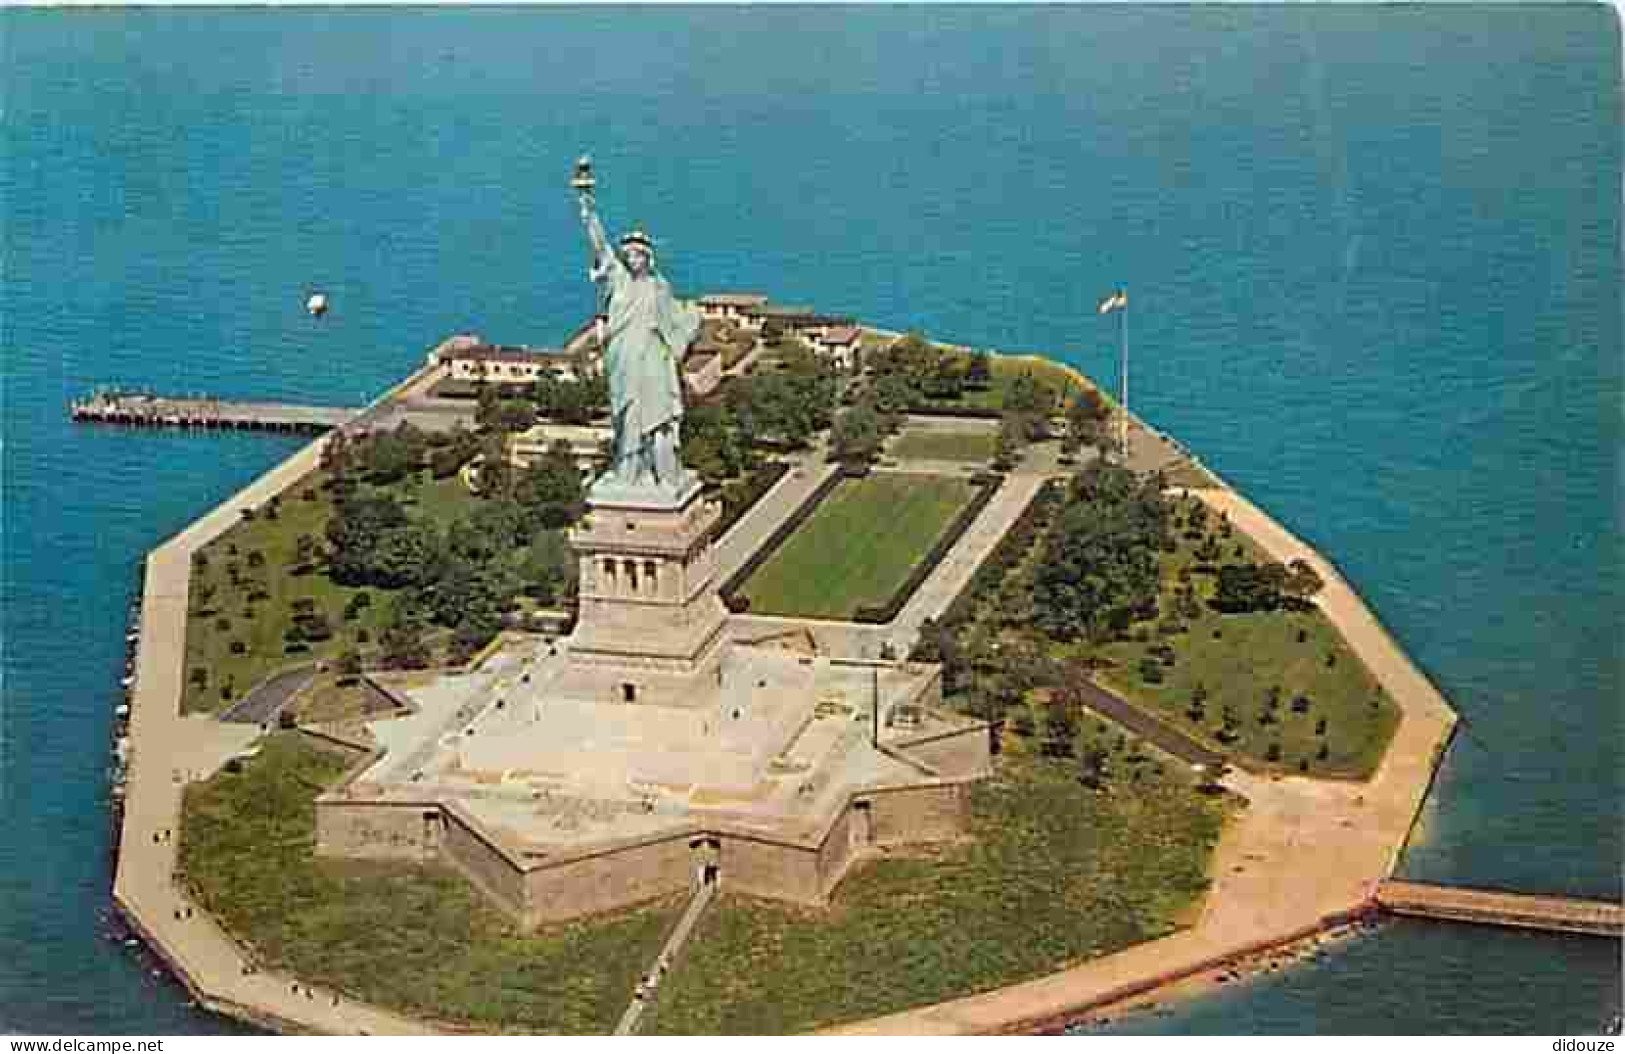 Etats Unis - New York - Statue Of Liberty - CPM - Voir Scans Recto-Verso - Statue Of Liberty